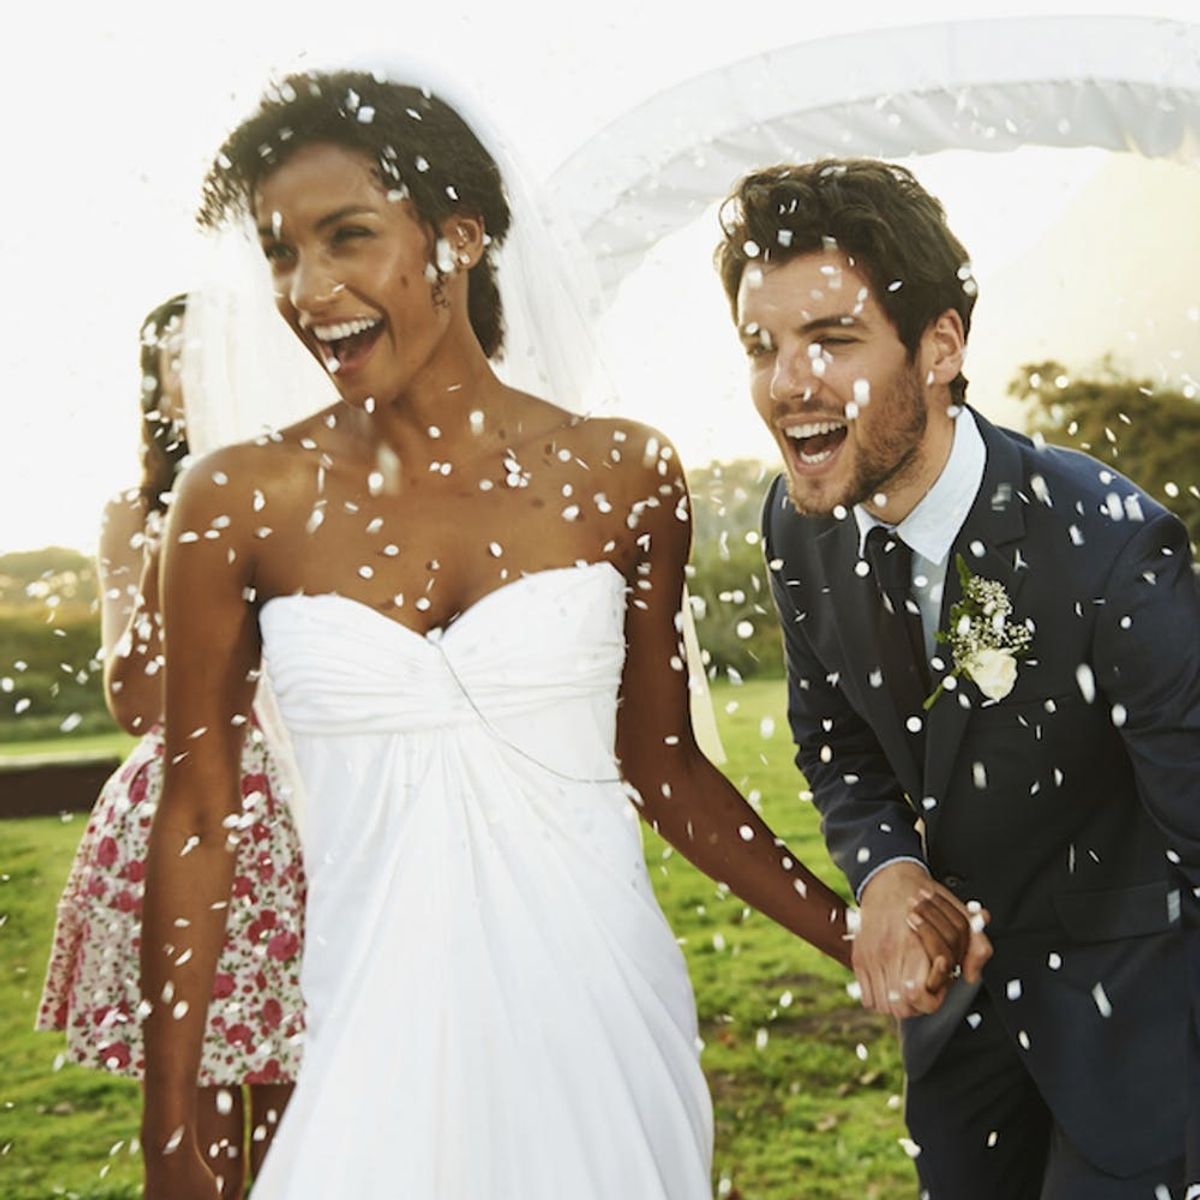 5 of the Wildest TaskRabbit Requests for Wedding Planning